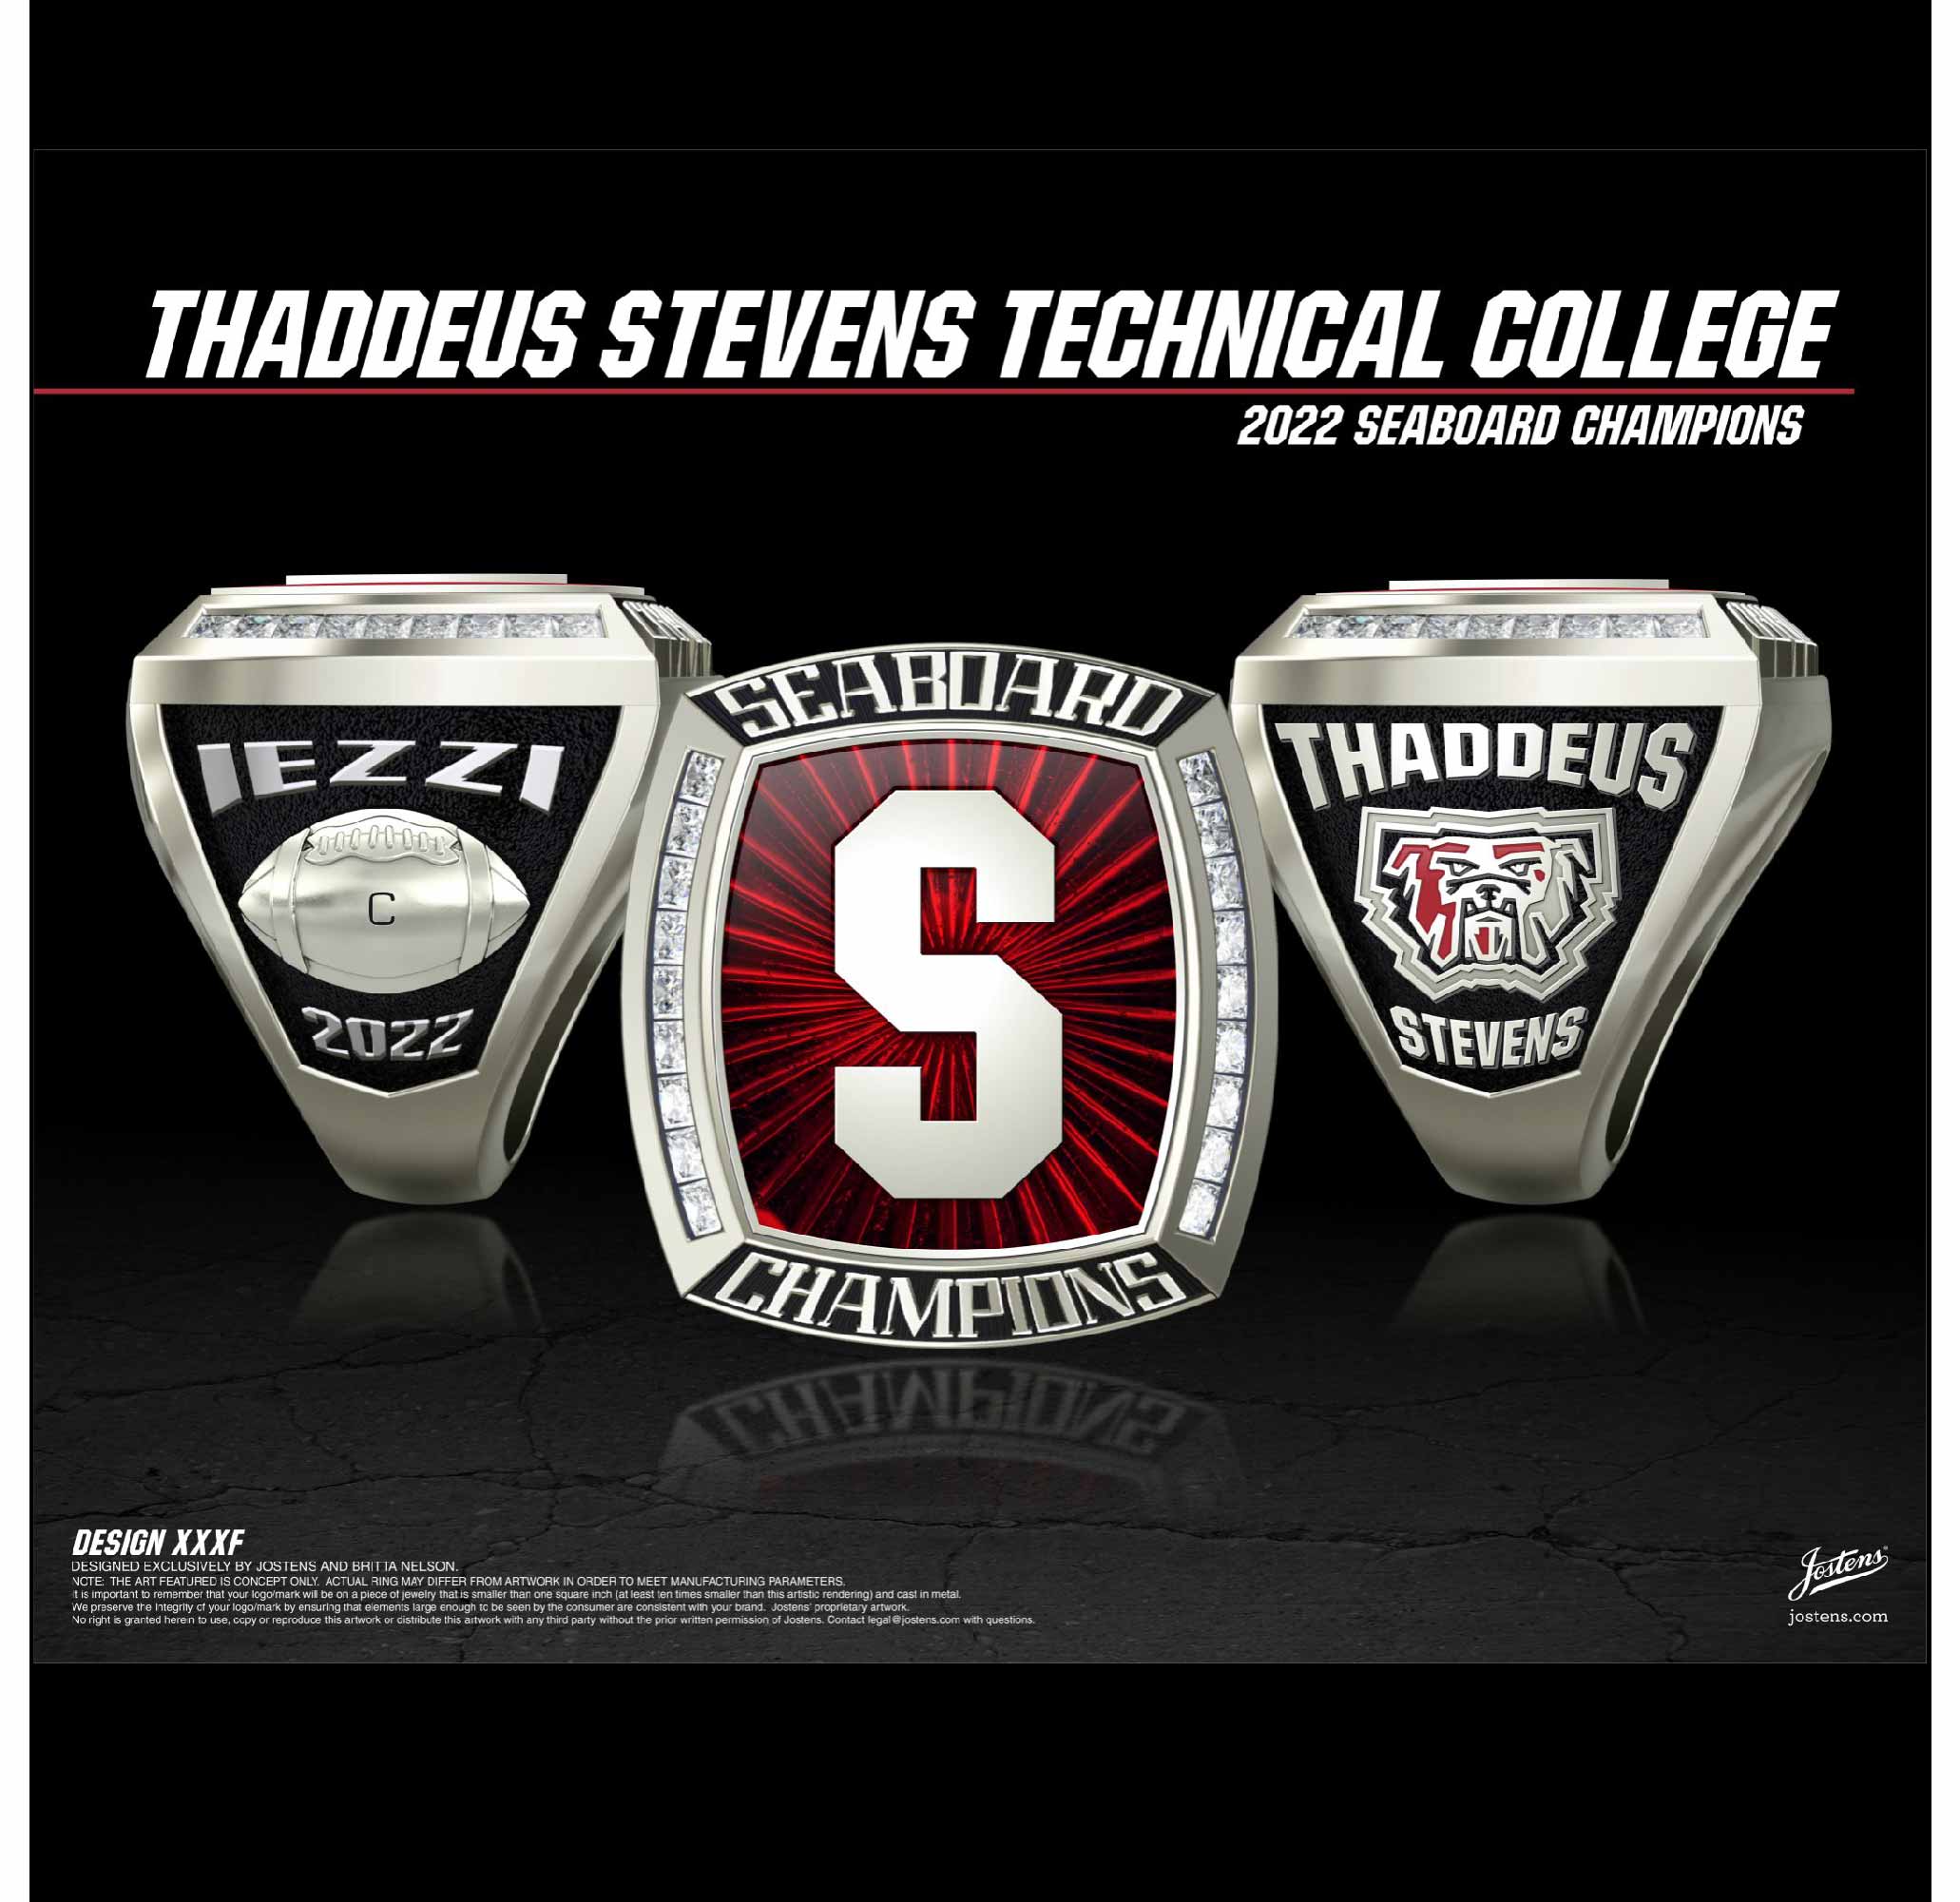 Thaddeus Stevens Technical College Football 2022 Seaboard Championship Ring